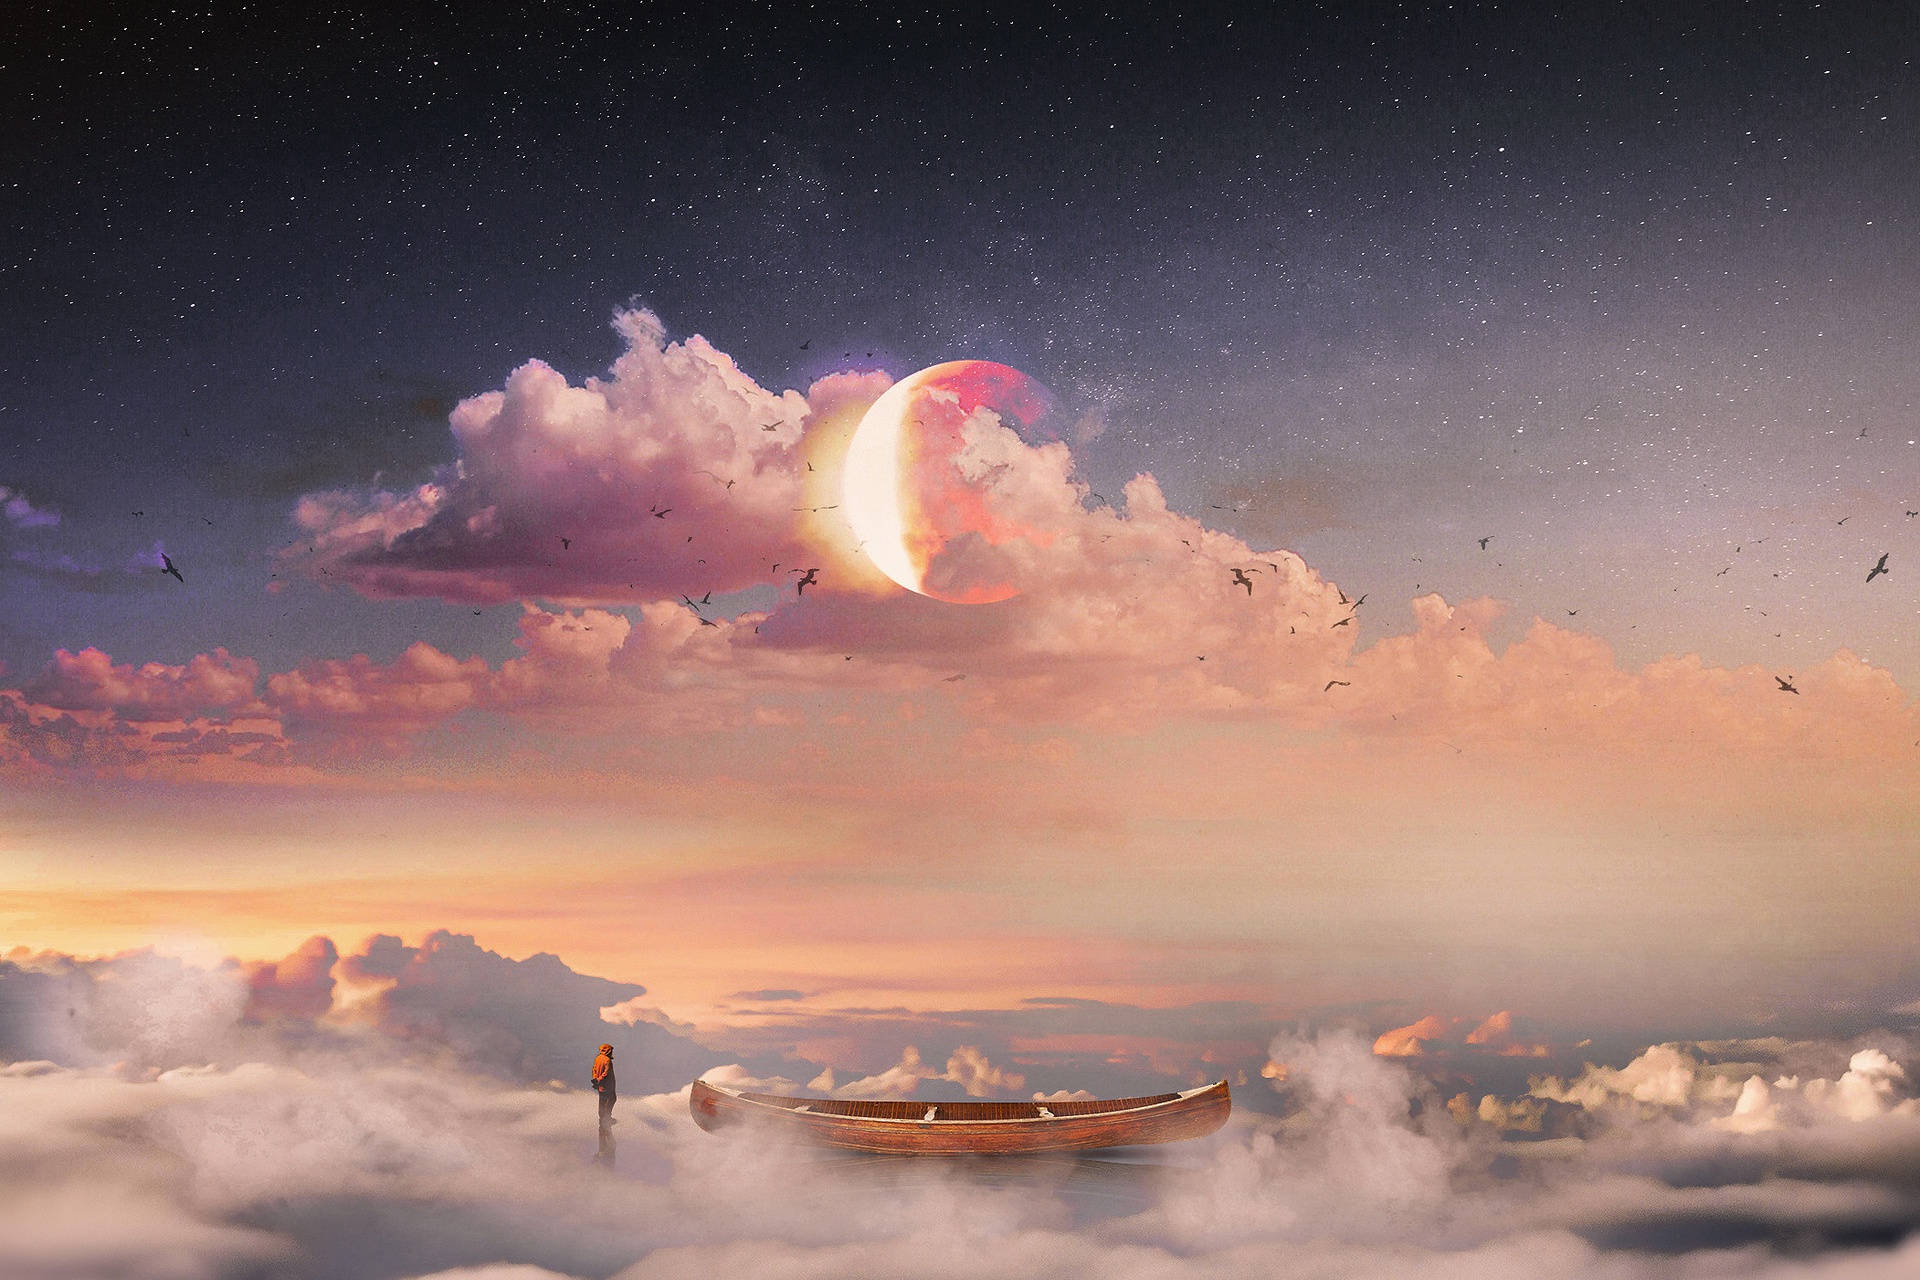 Dream Cloud And Boat Art Wallpaper